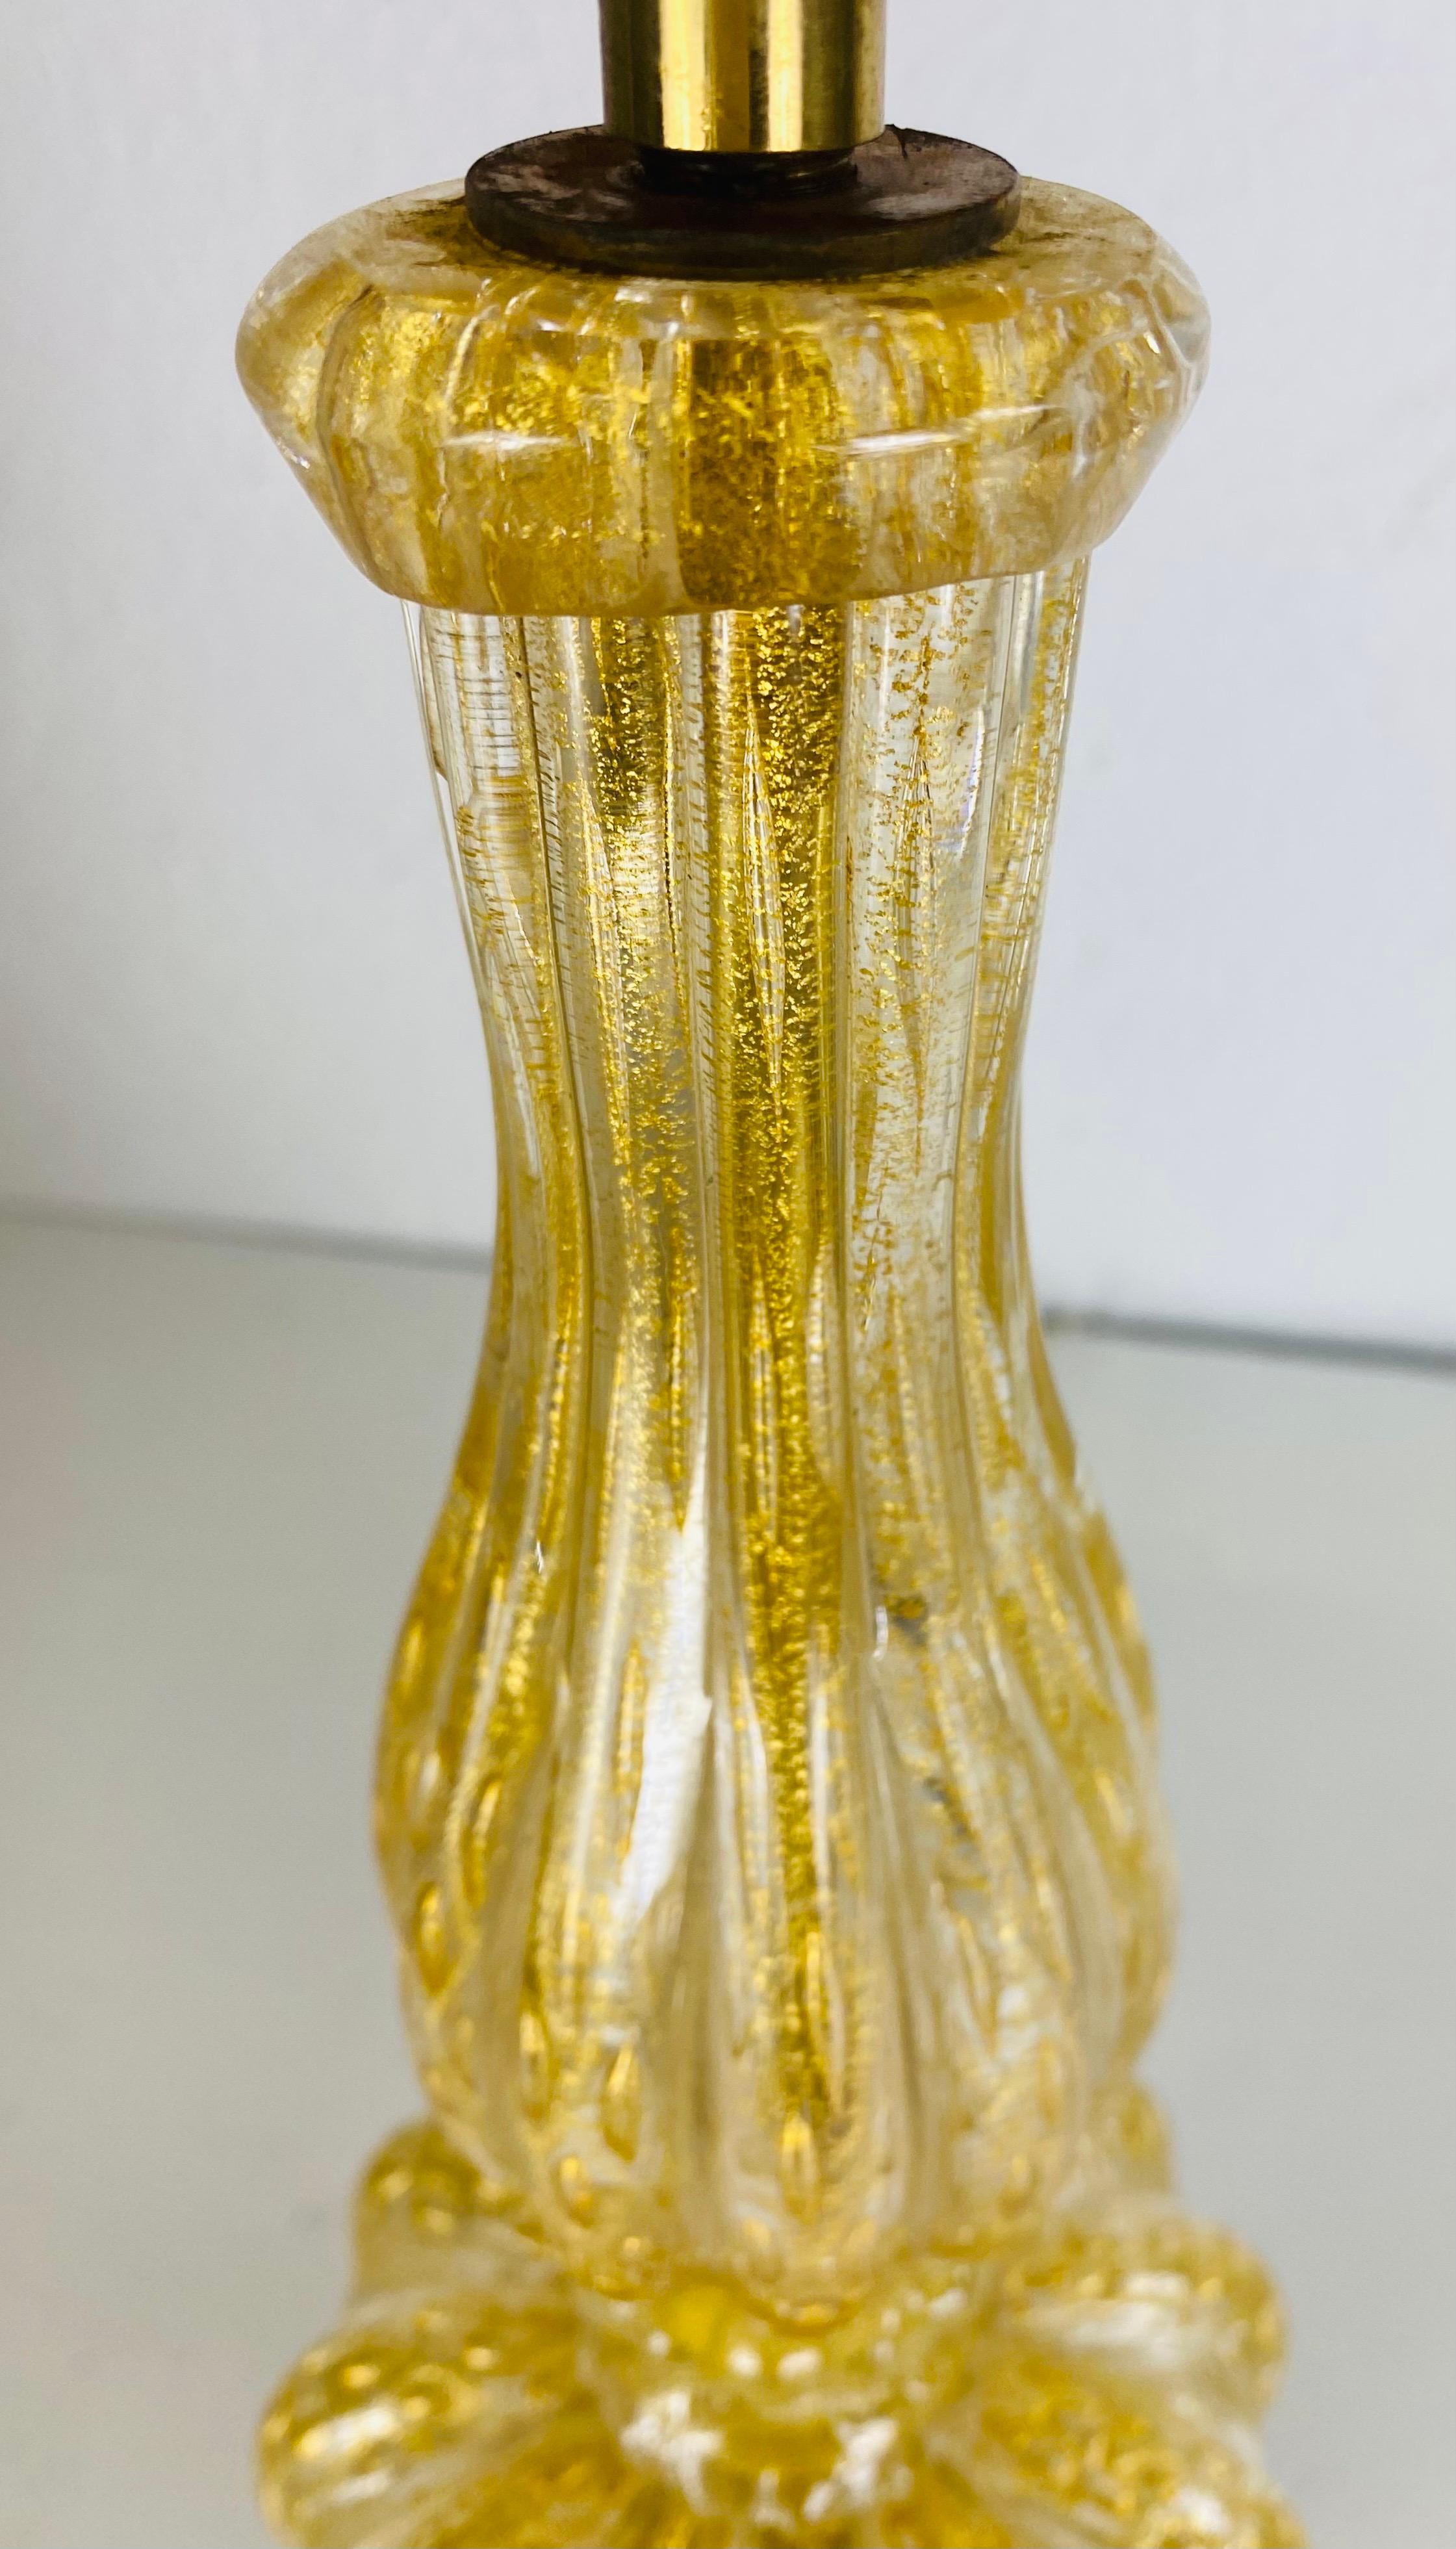 Barovier Toso single handblown Marano glass table lamp For Sale 1